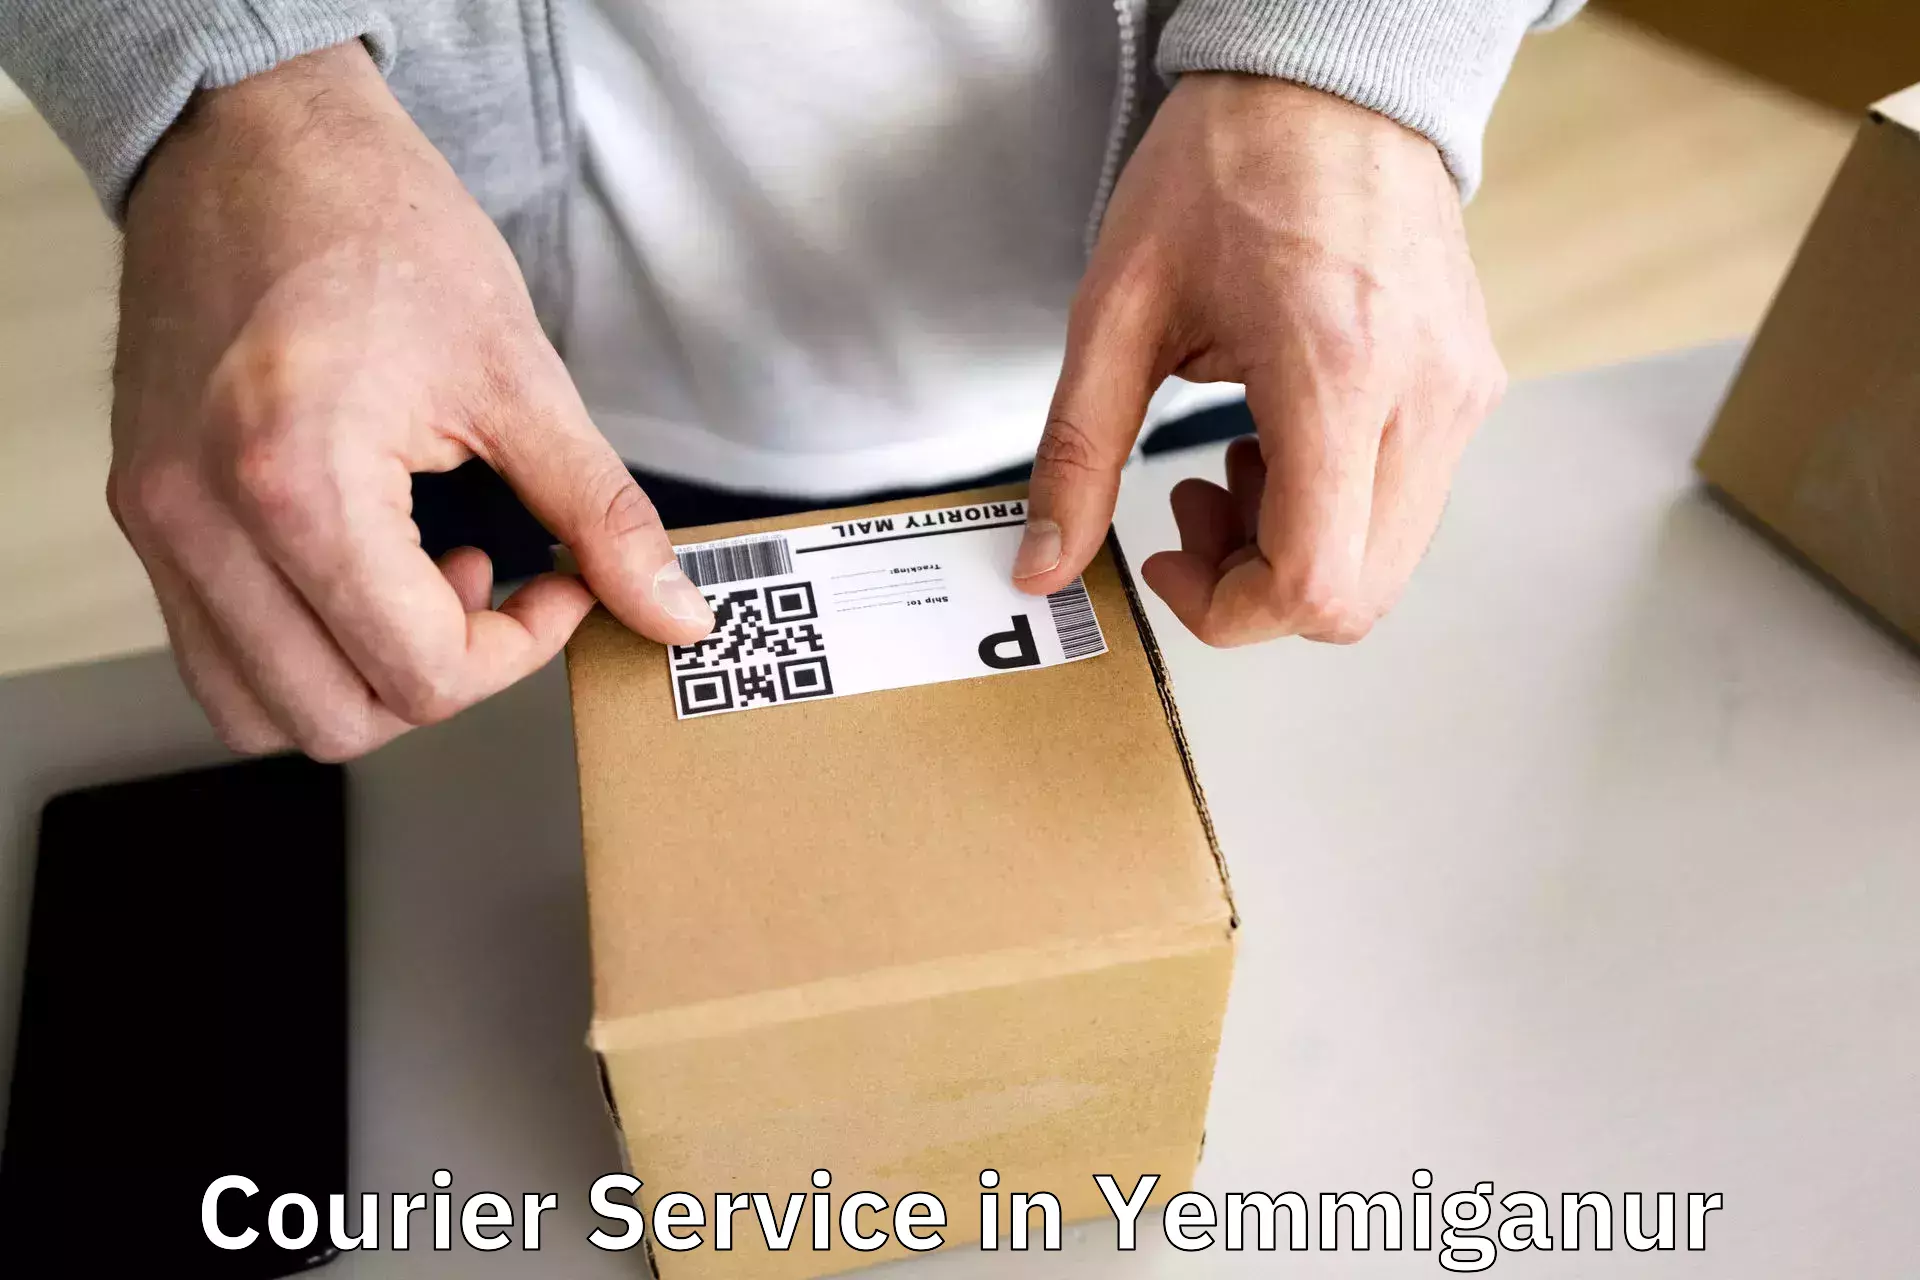 High-priority parcel service in Yemmiganur